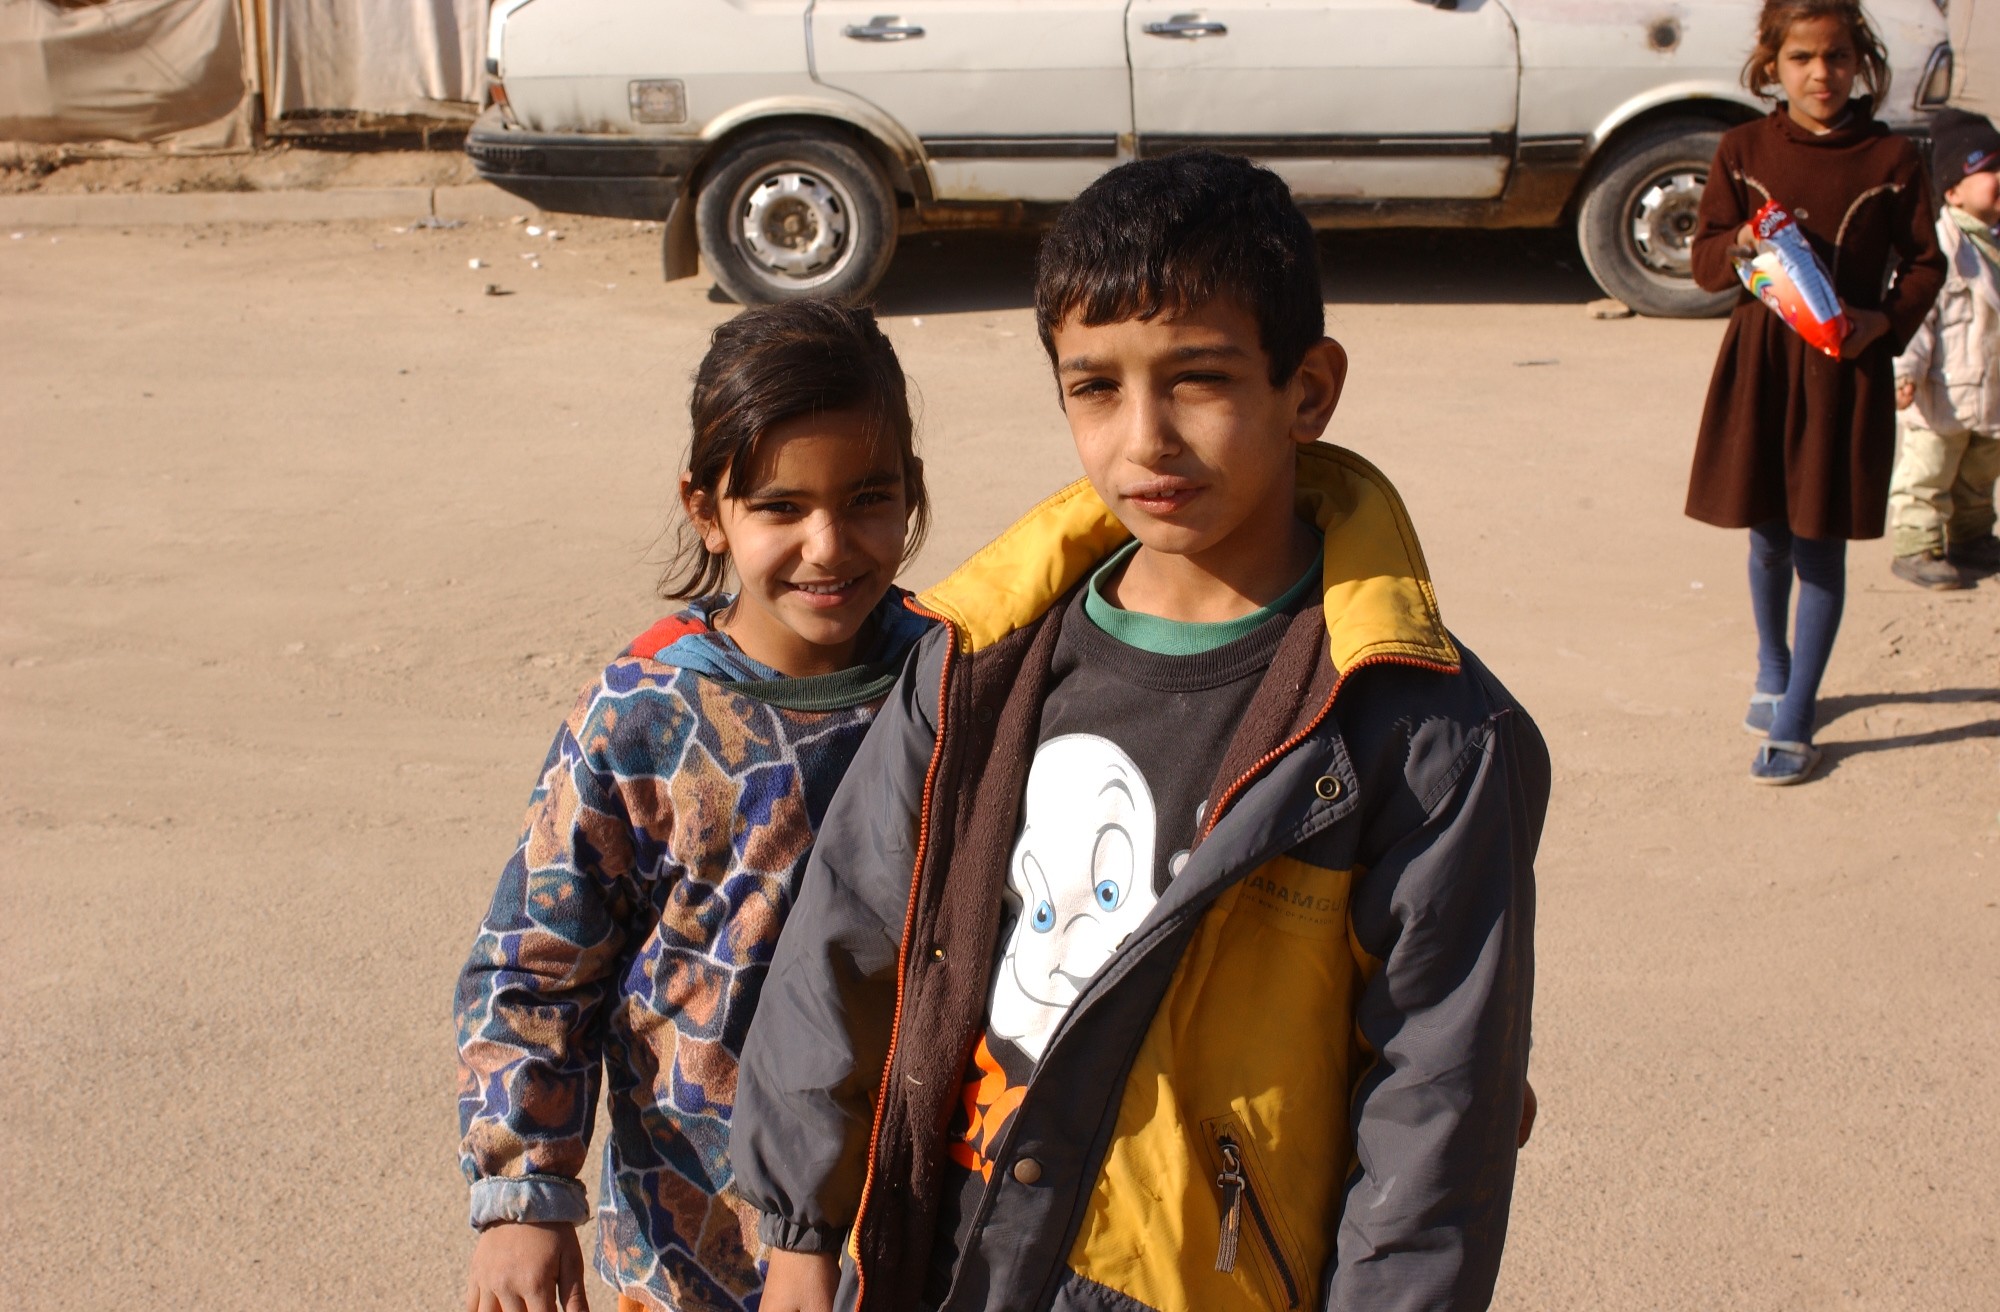 Balad IRAQ children of War series Jul 2007